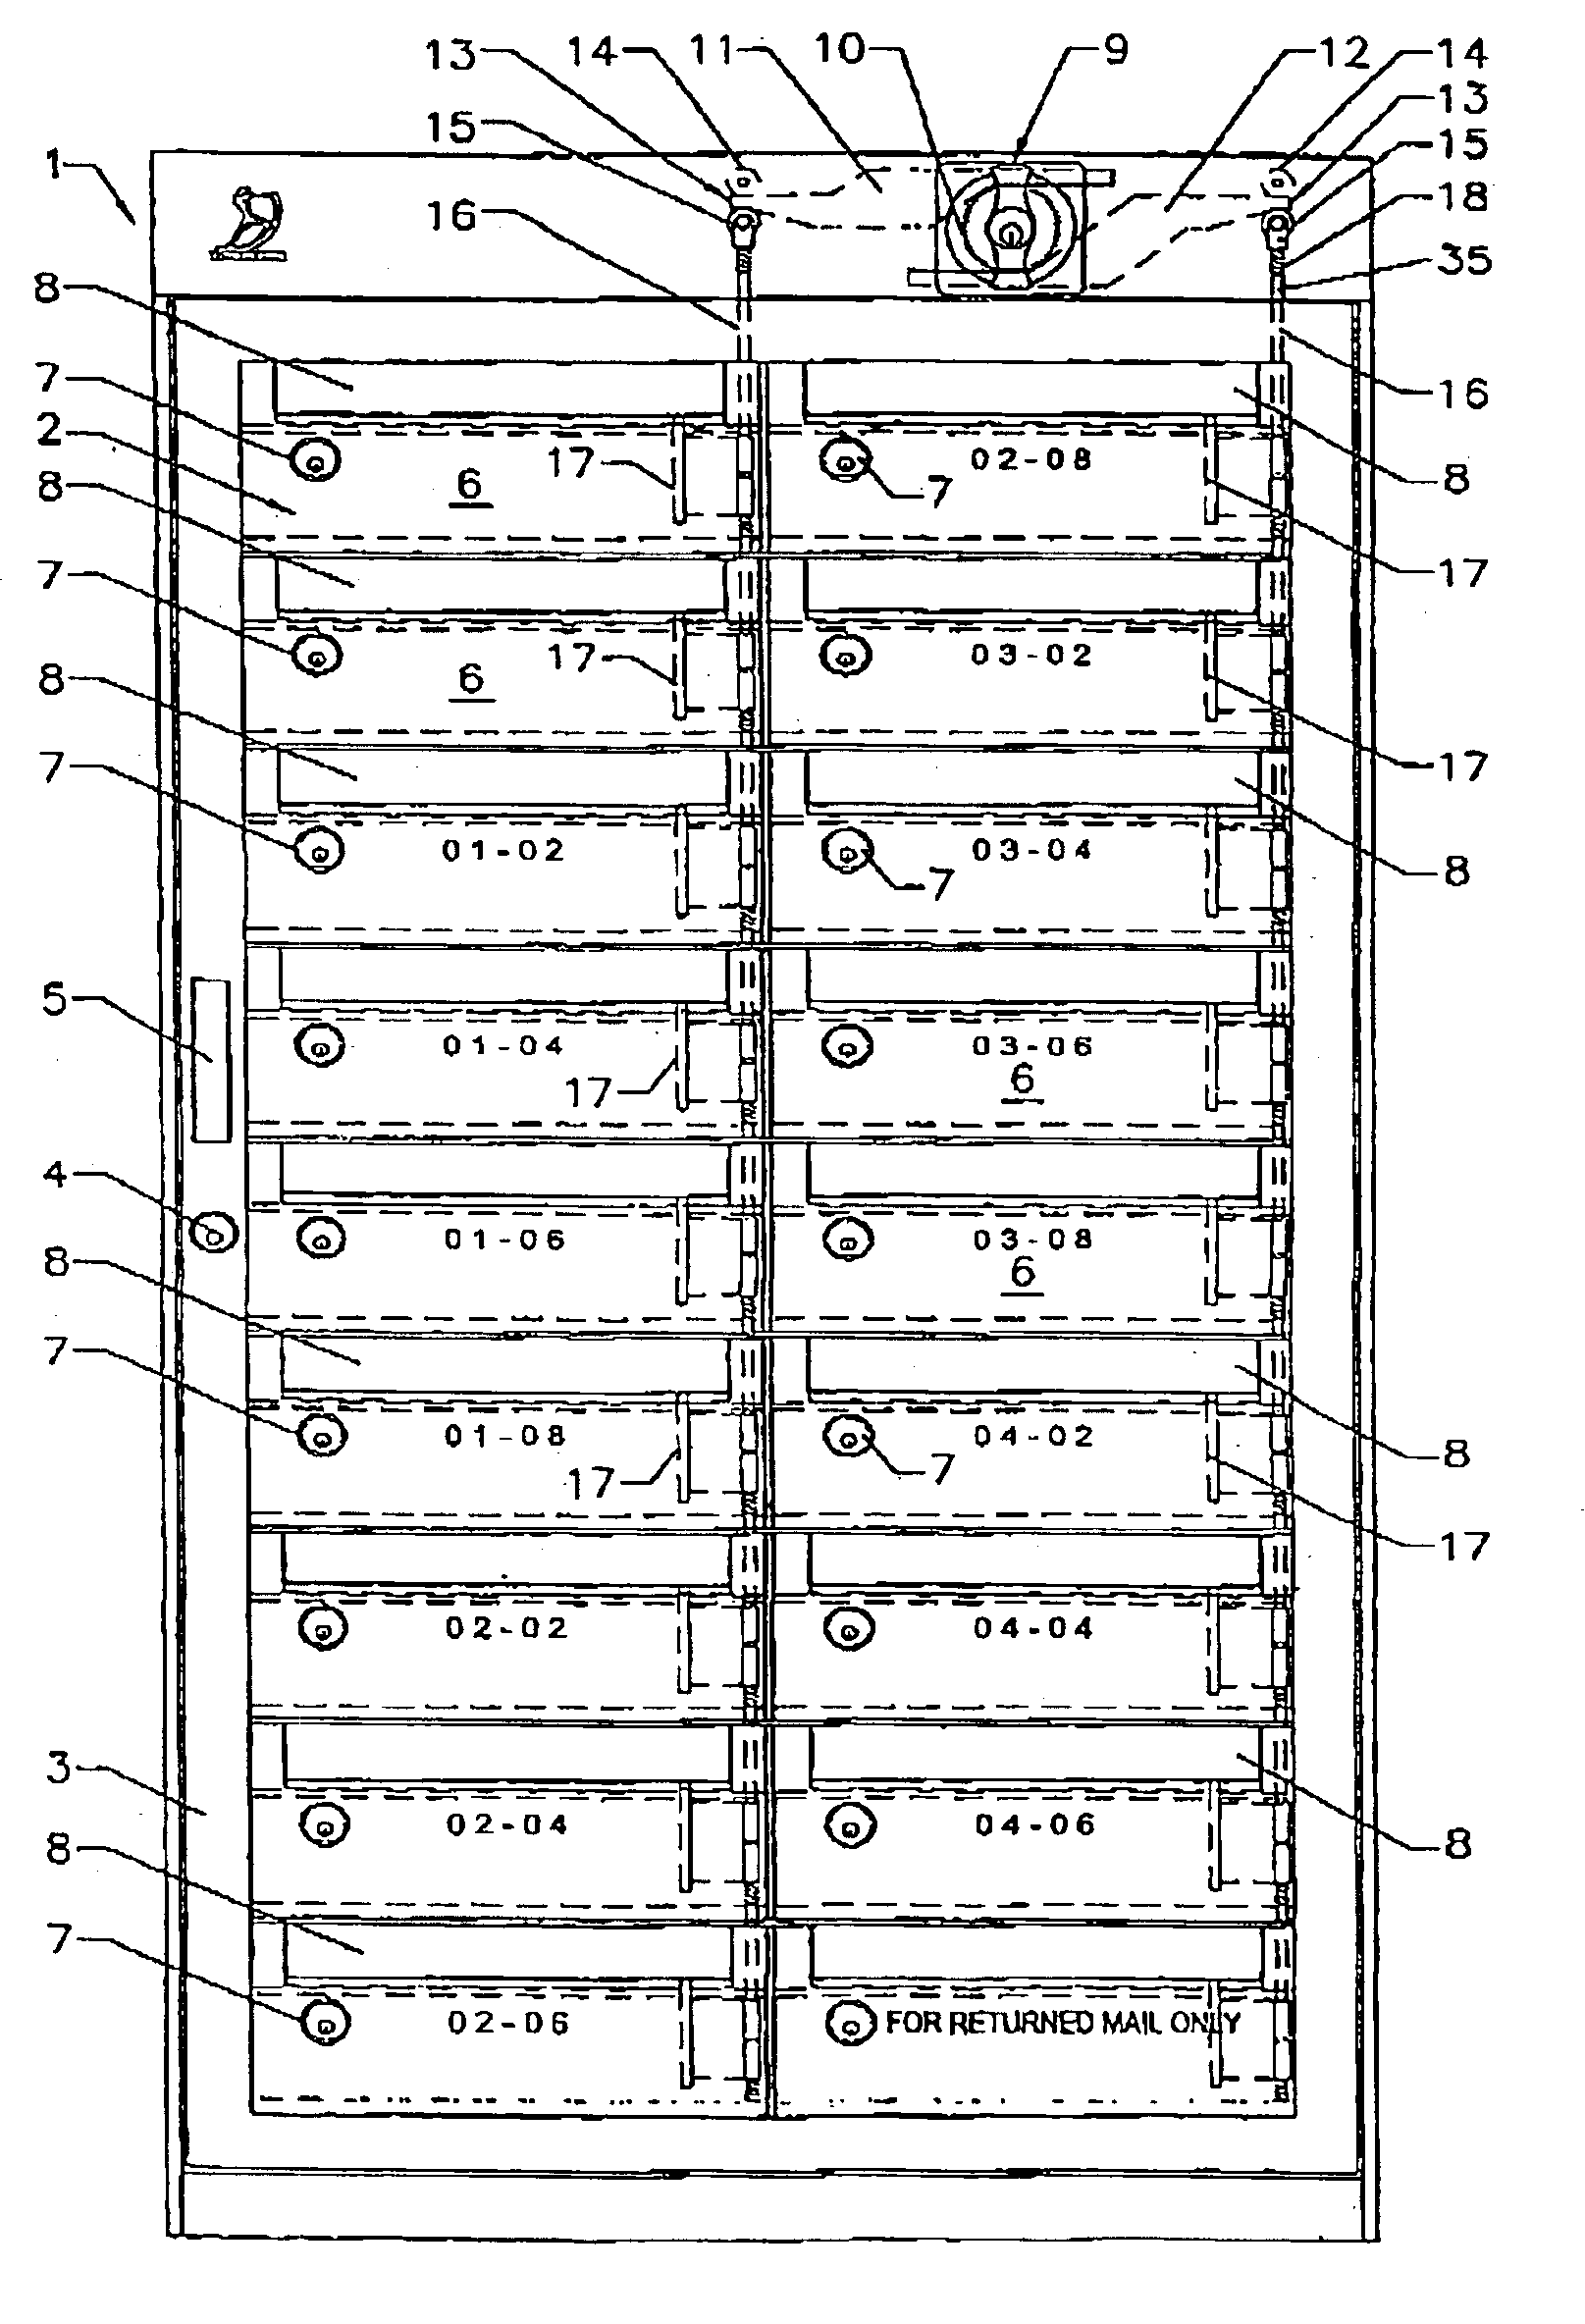 Multi-compartment mailboxes